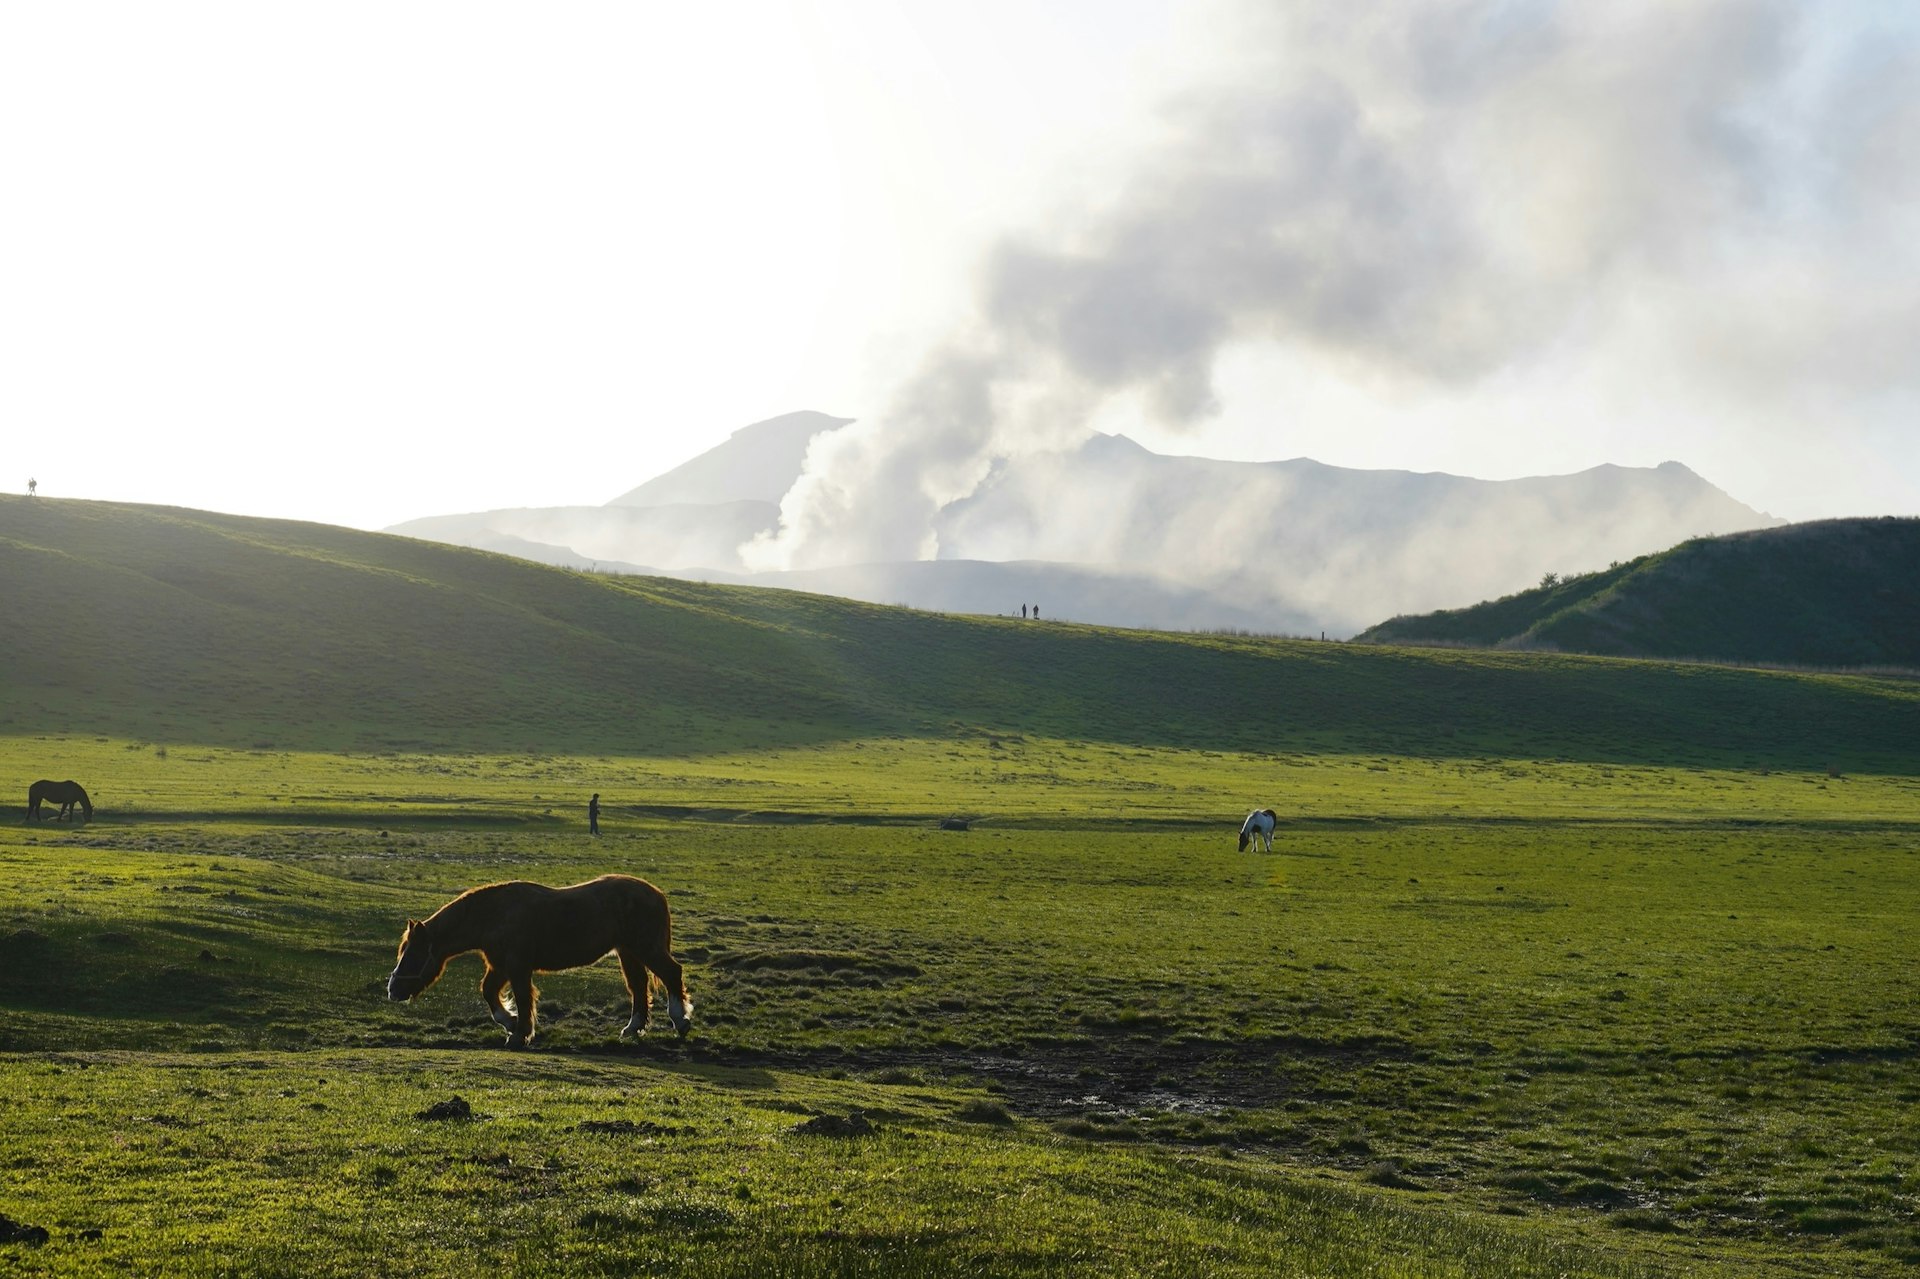 A view of Mt. Aso that spits smoke